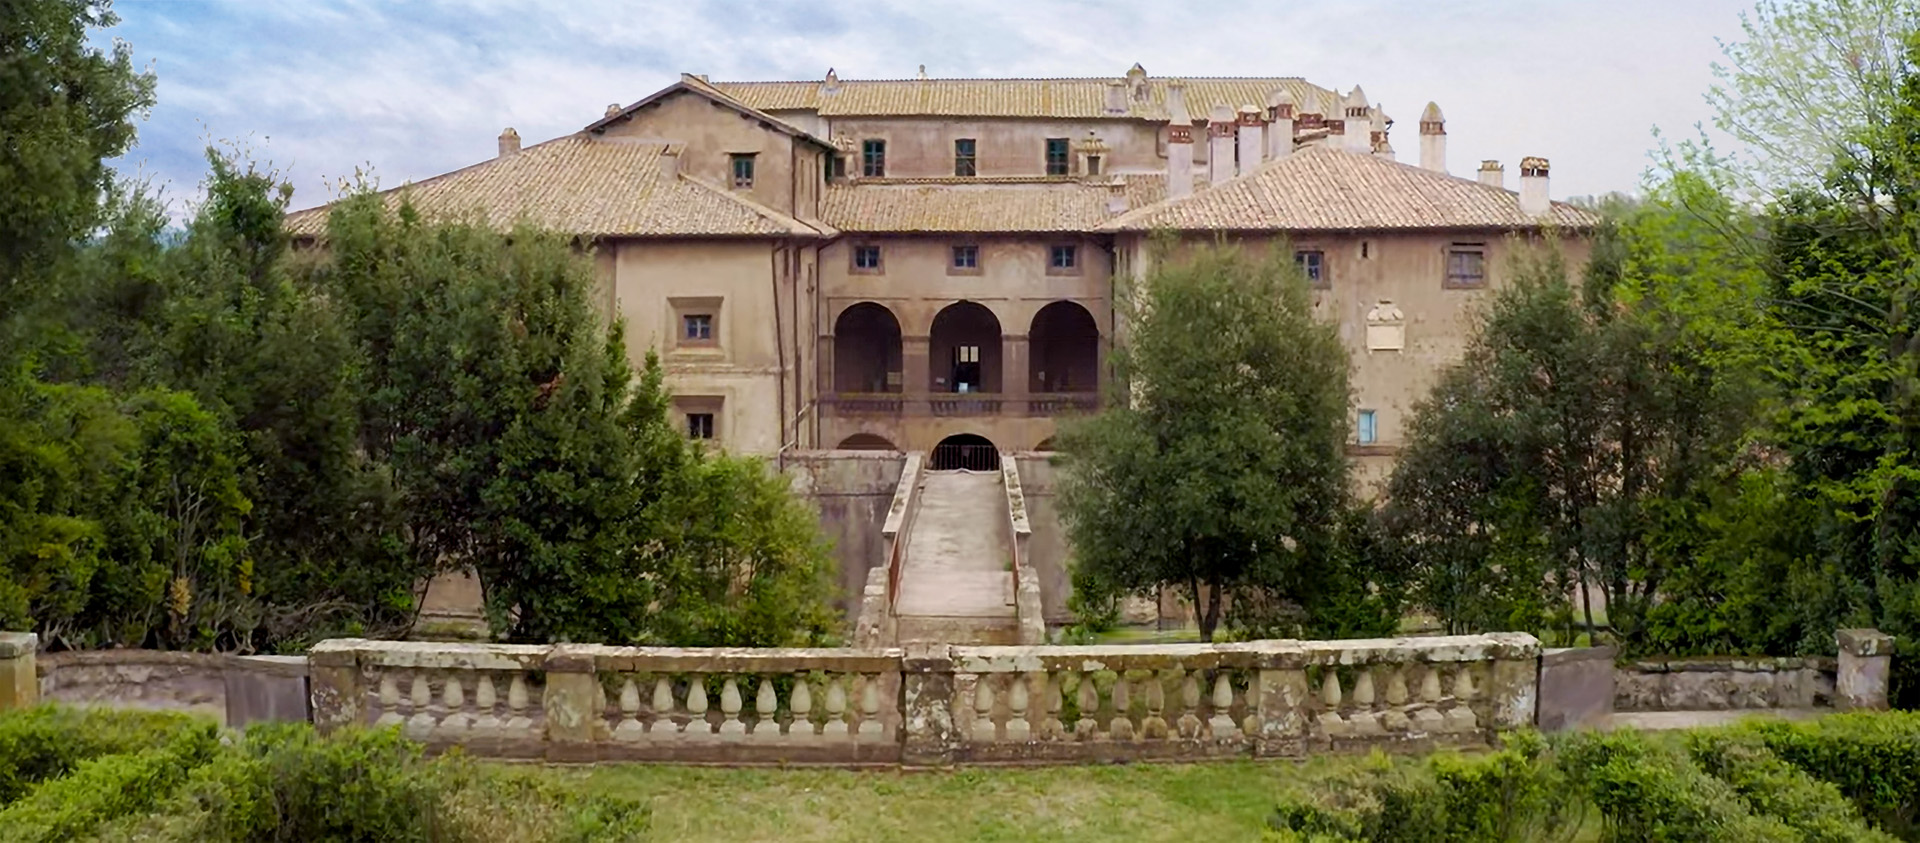 Bassano Romano - Villa Giustiniani dal giardino all'italiana